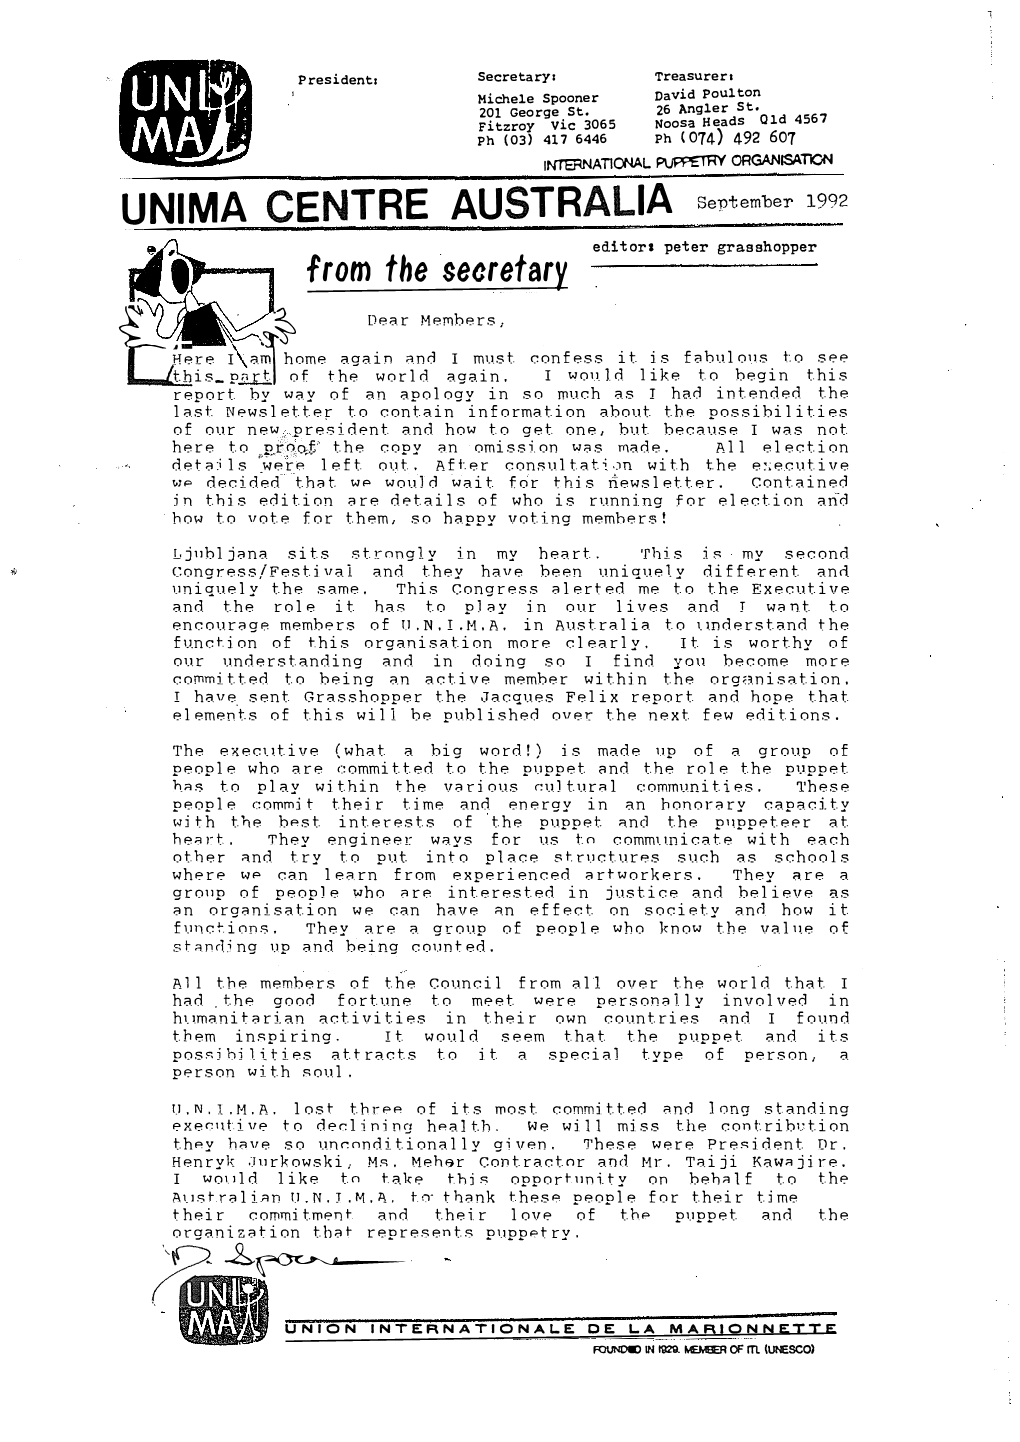 UNIMA CENTRE AUSTRALIA September 1992 from the Secretary Editors Peter Grasshopper